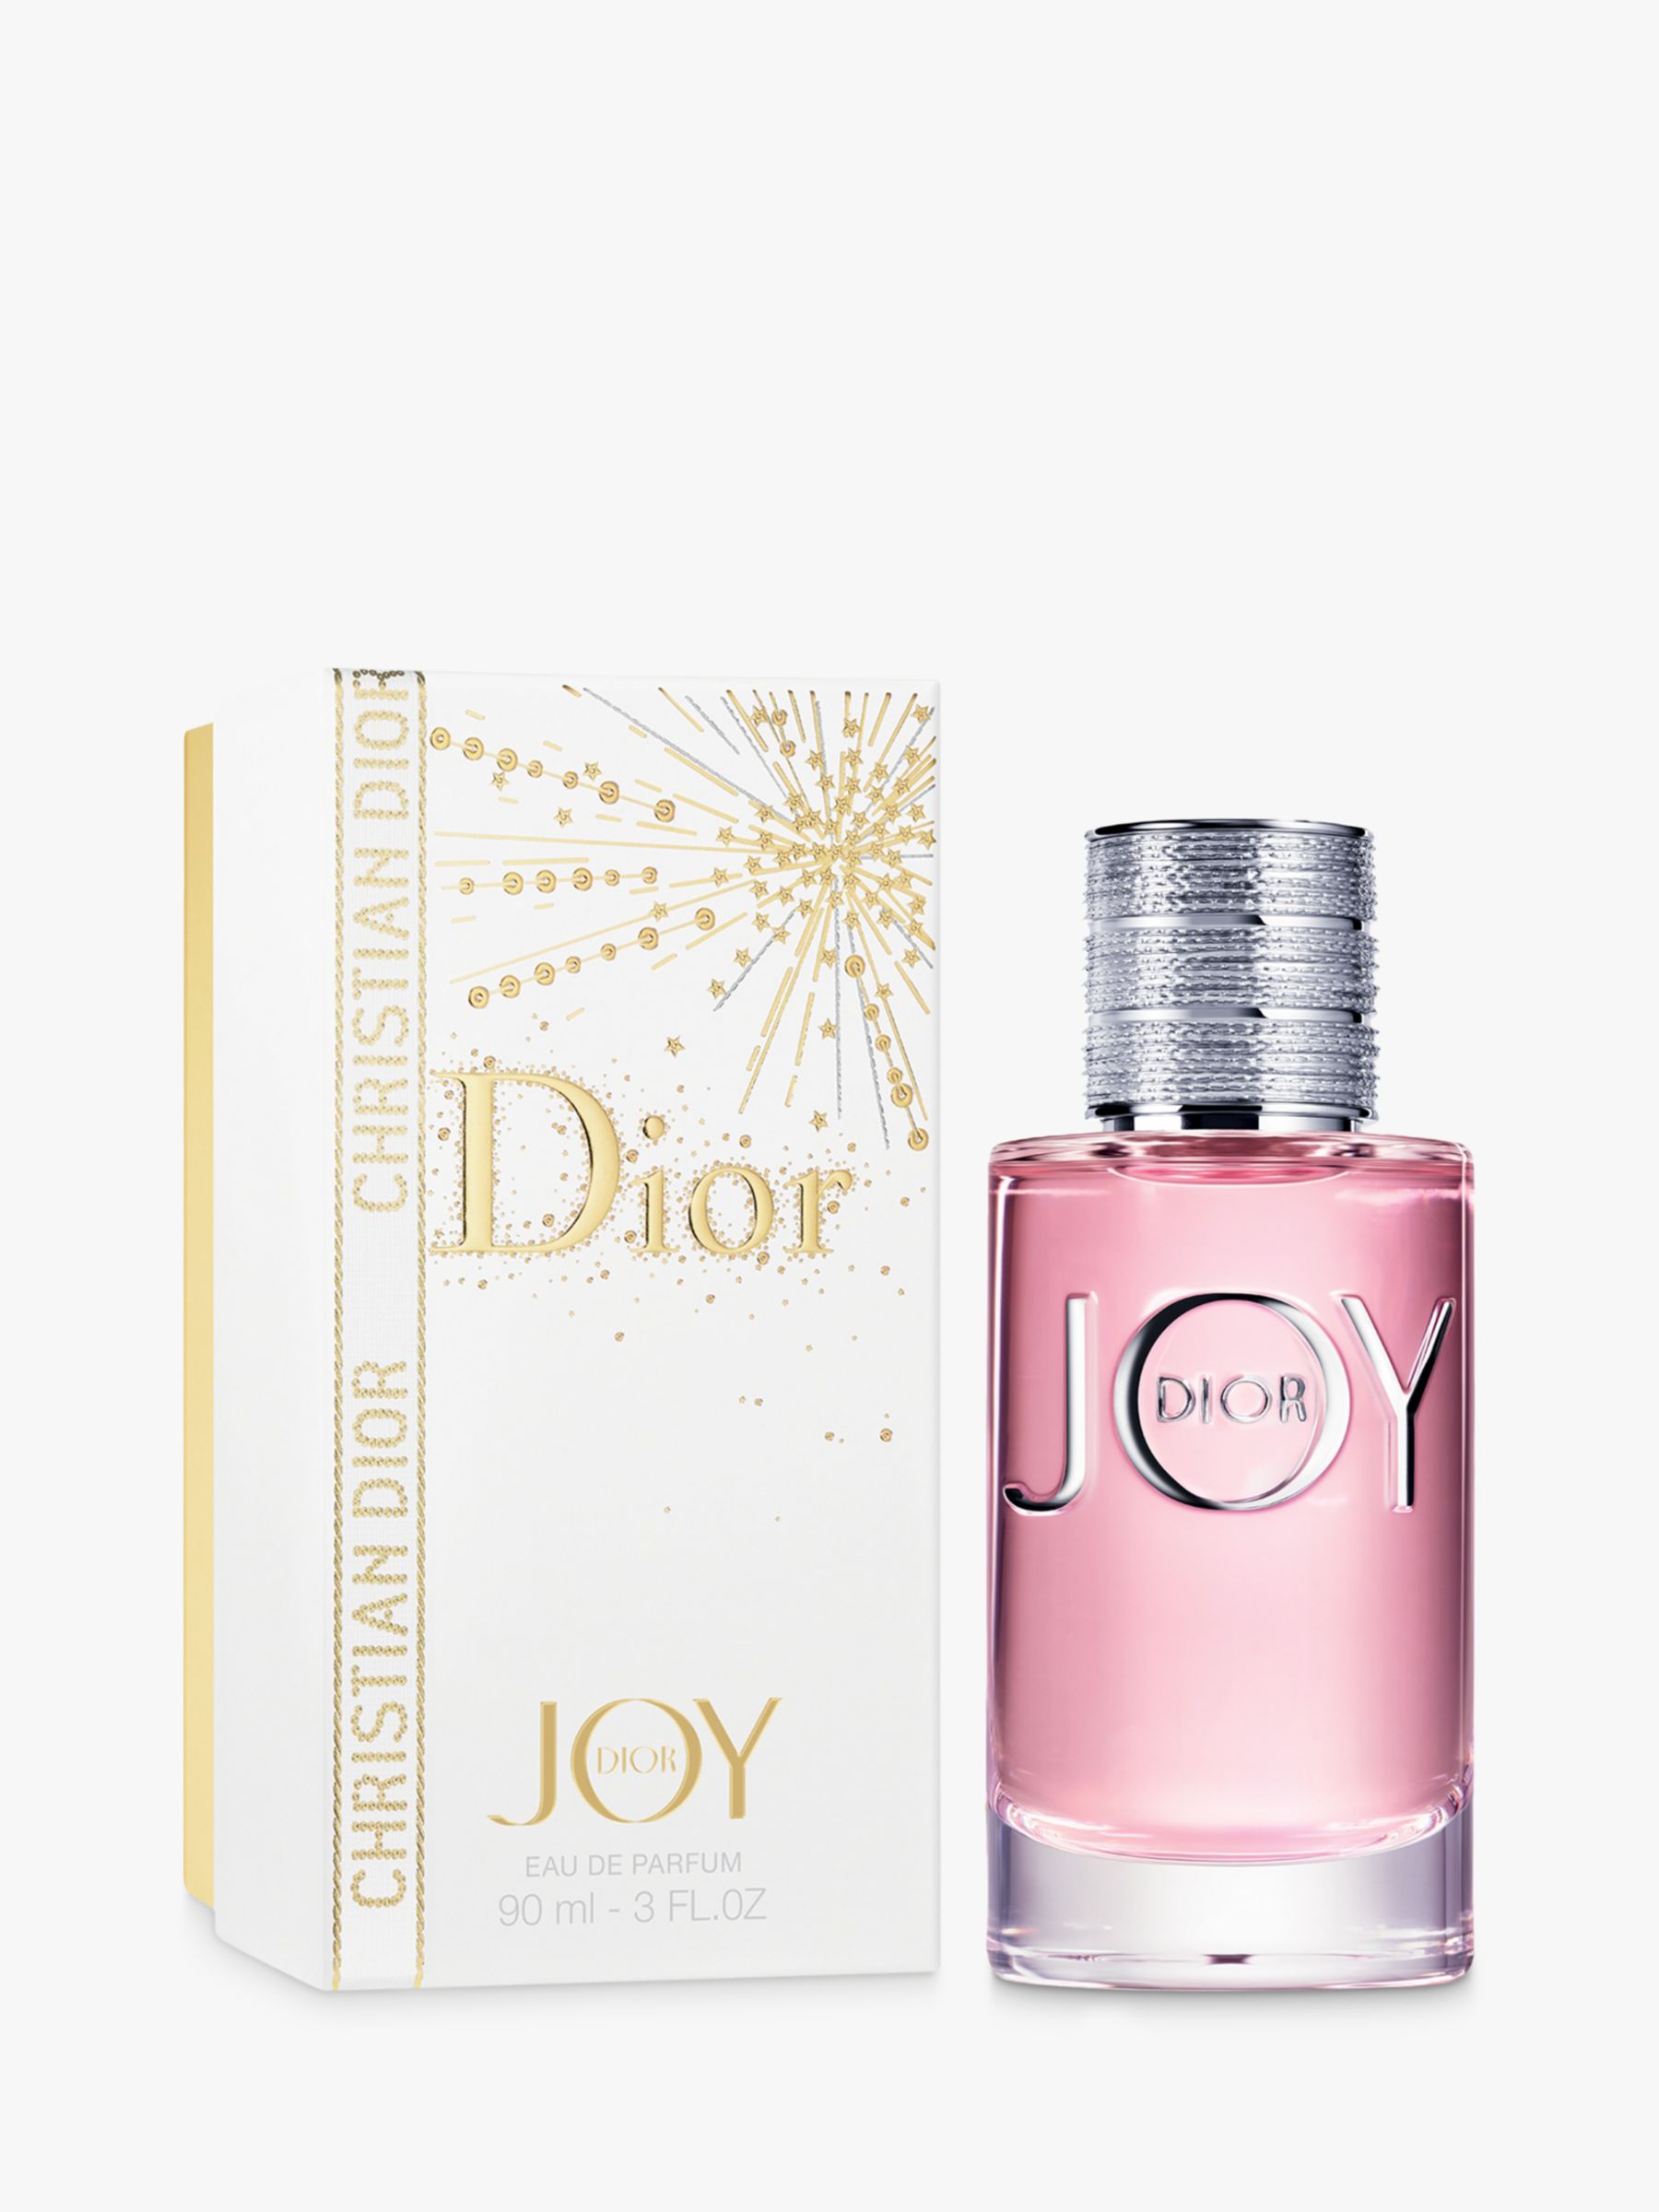 joy dior price 90ml